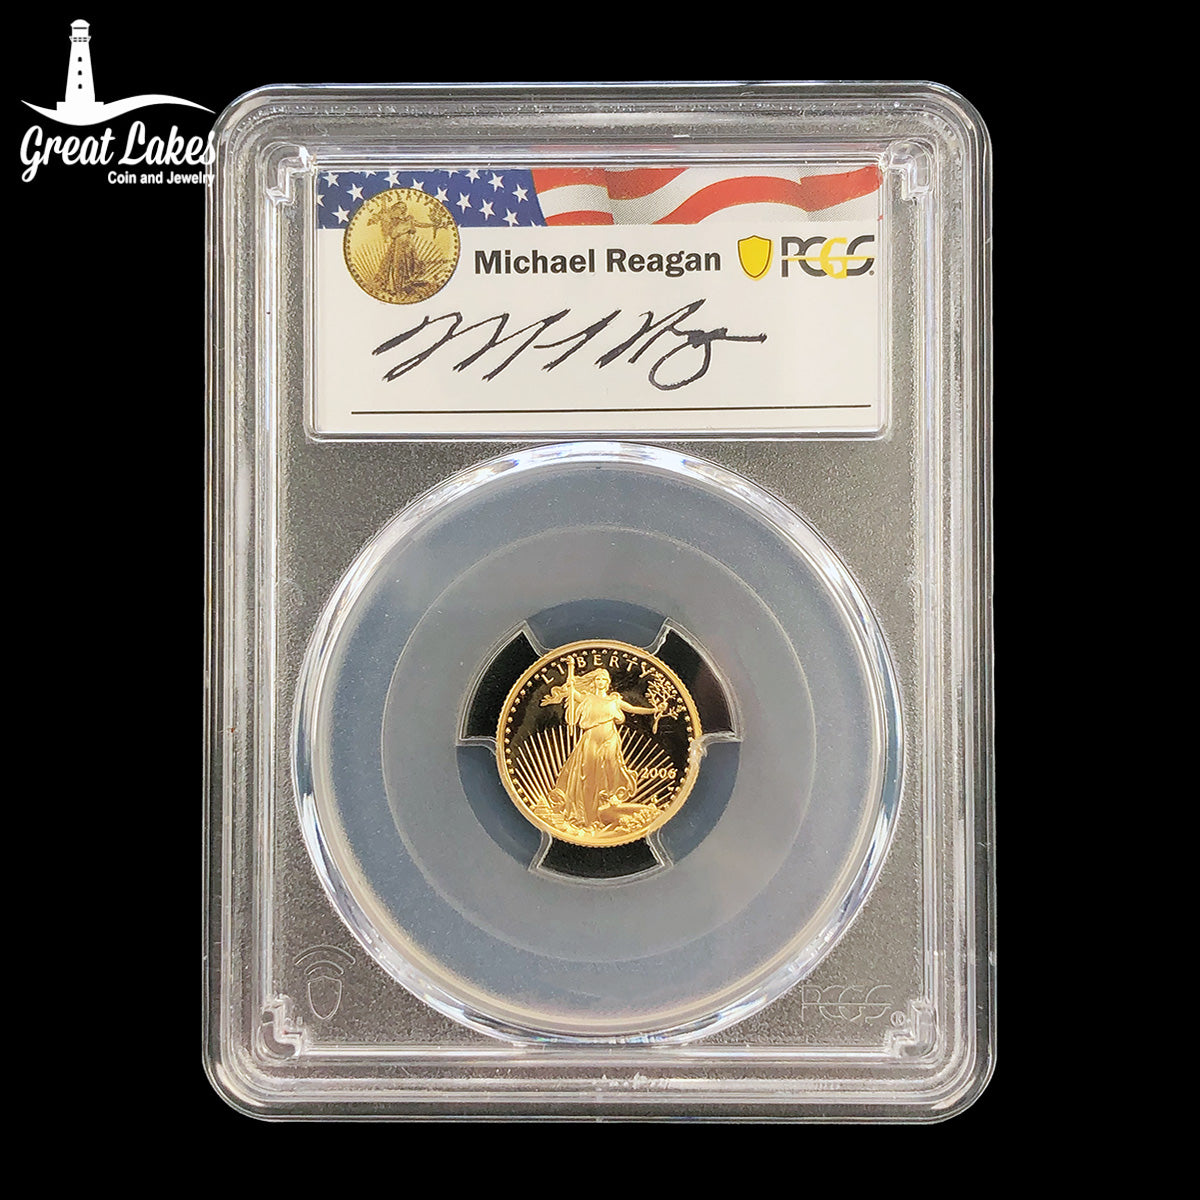 2006-W 1/10 oz American Gold Eagle PCGS PR69 DCAM (Reagan)